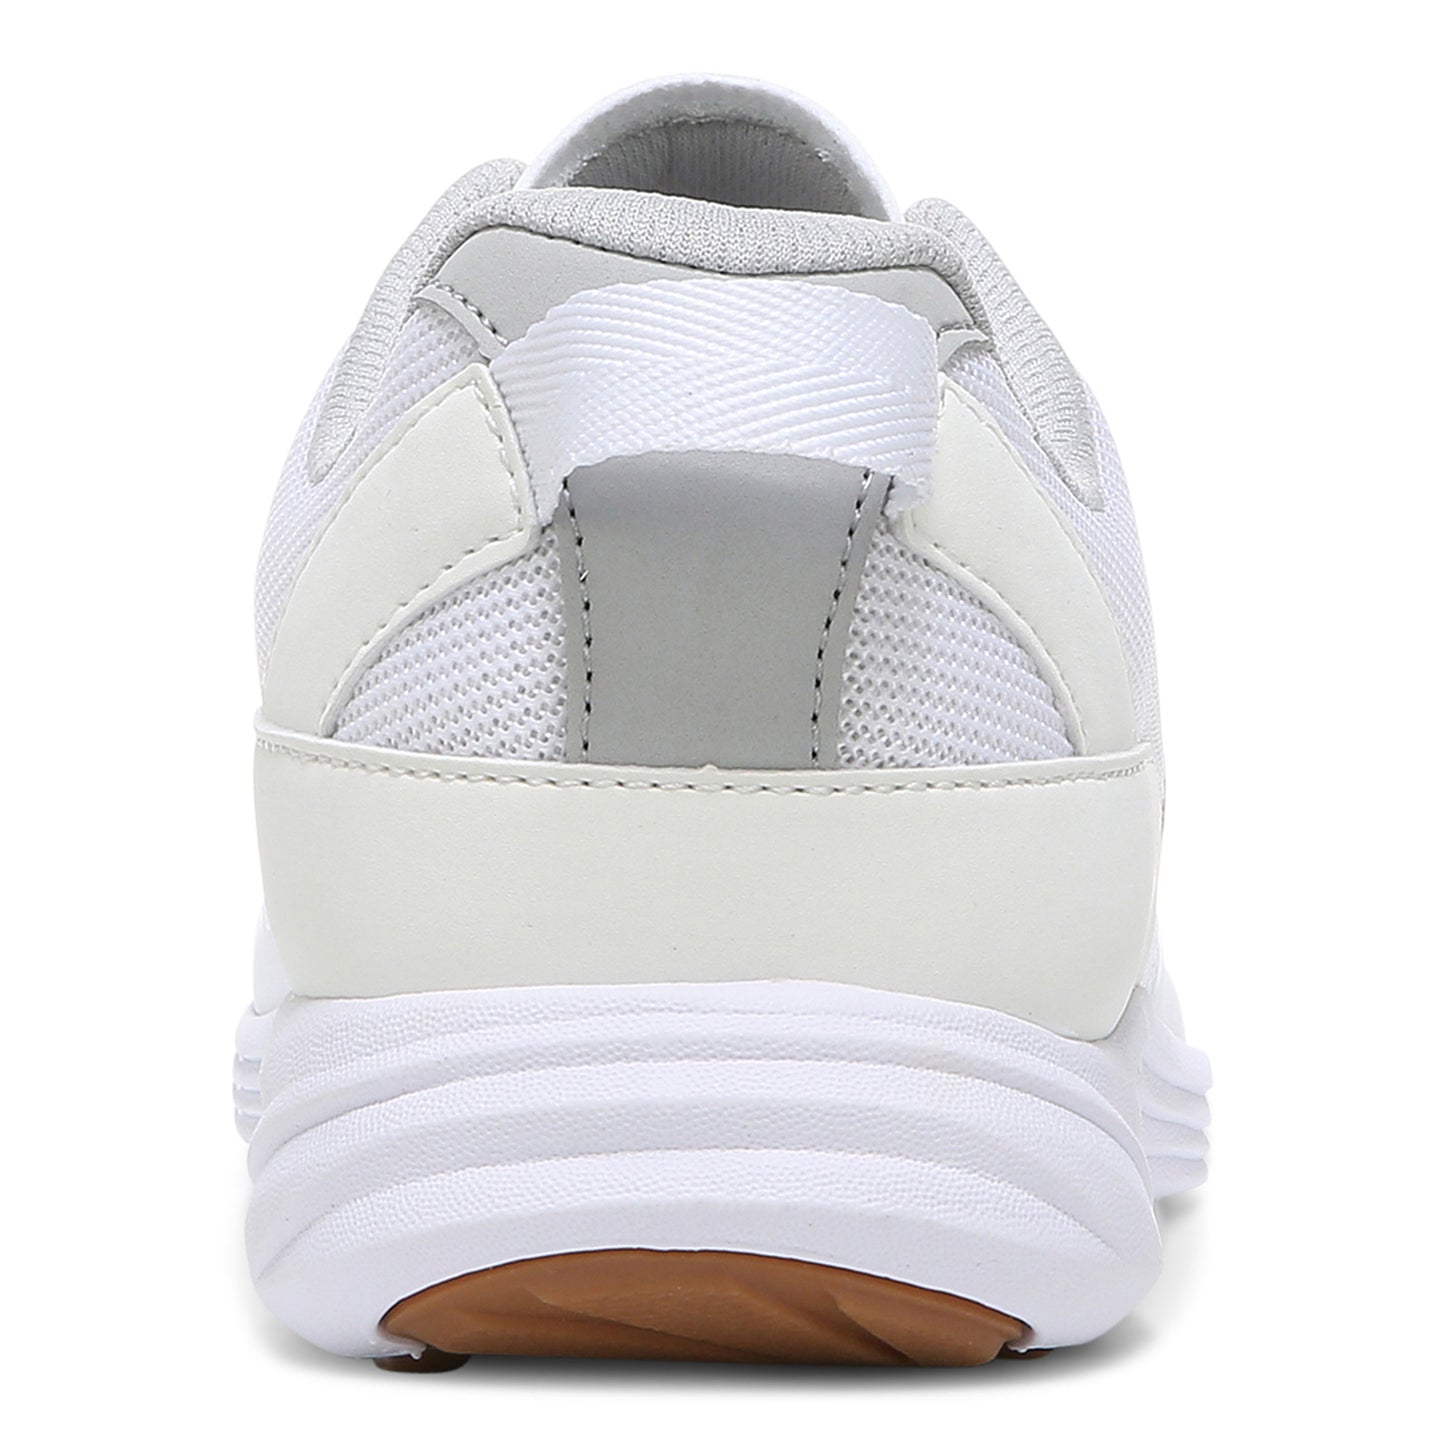 Peltz Shoes  Women's Vionic Agile Audie Sneaker WHITE I2035M1100